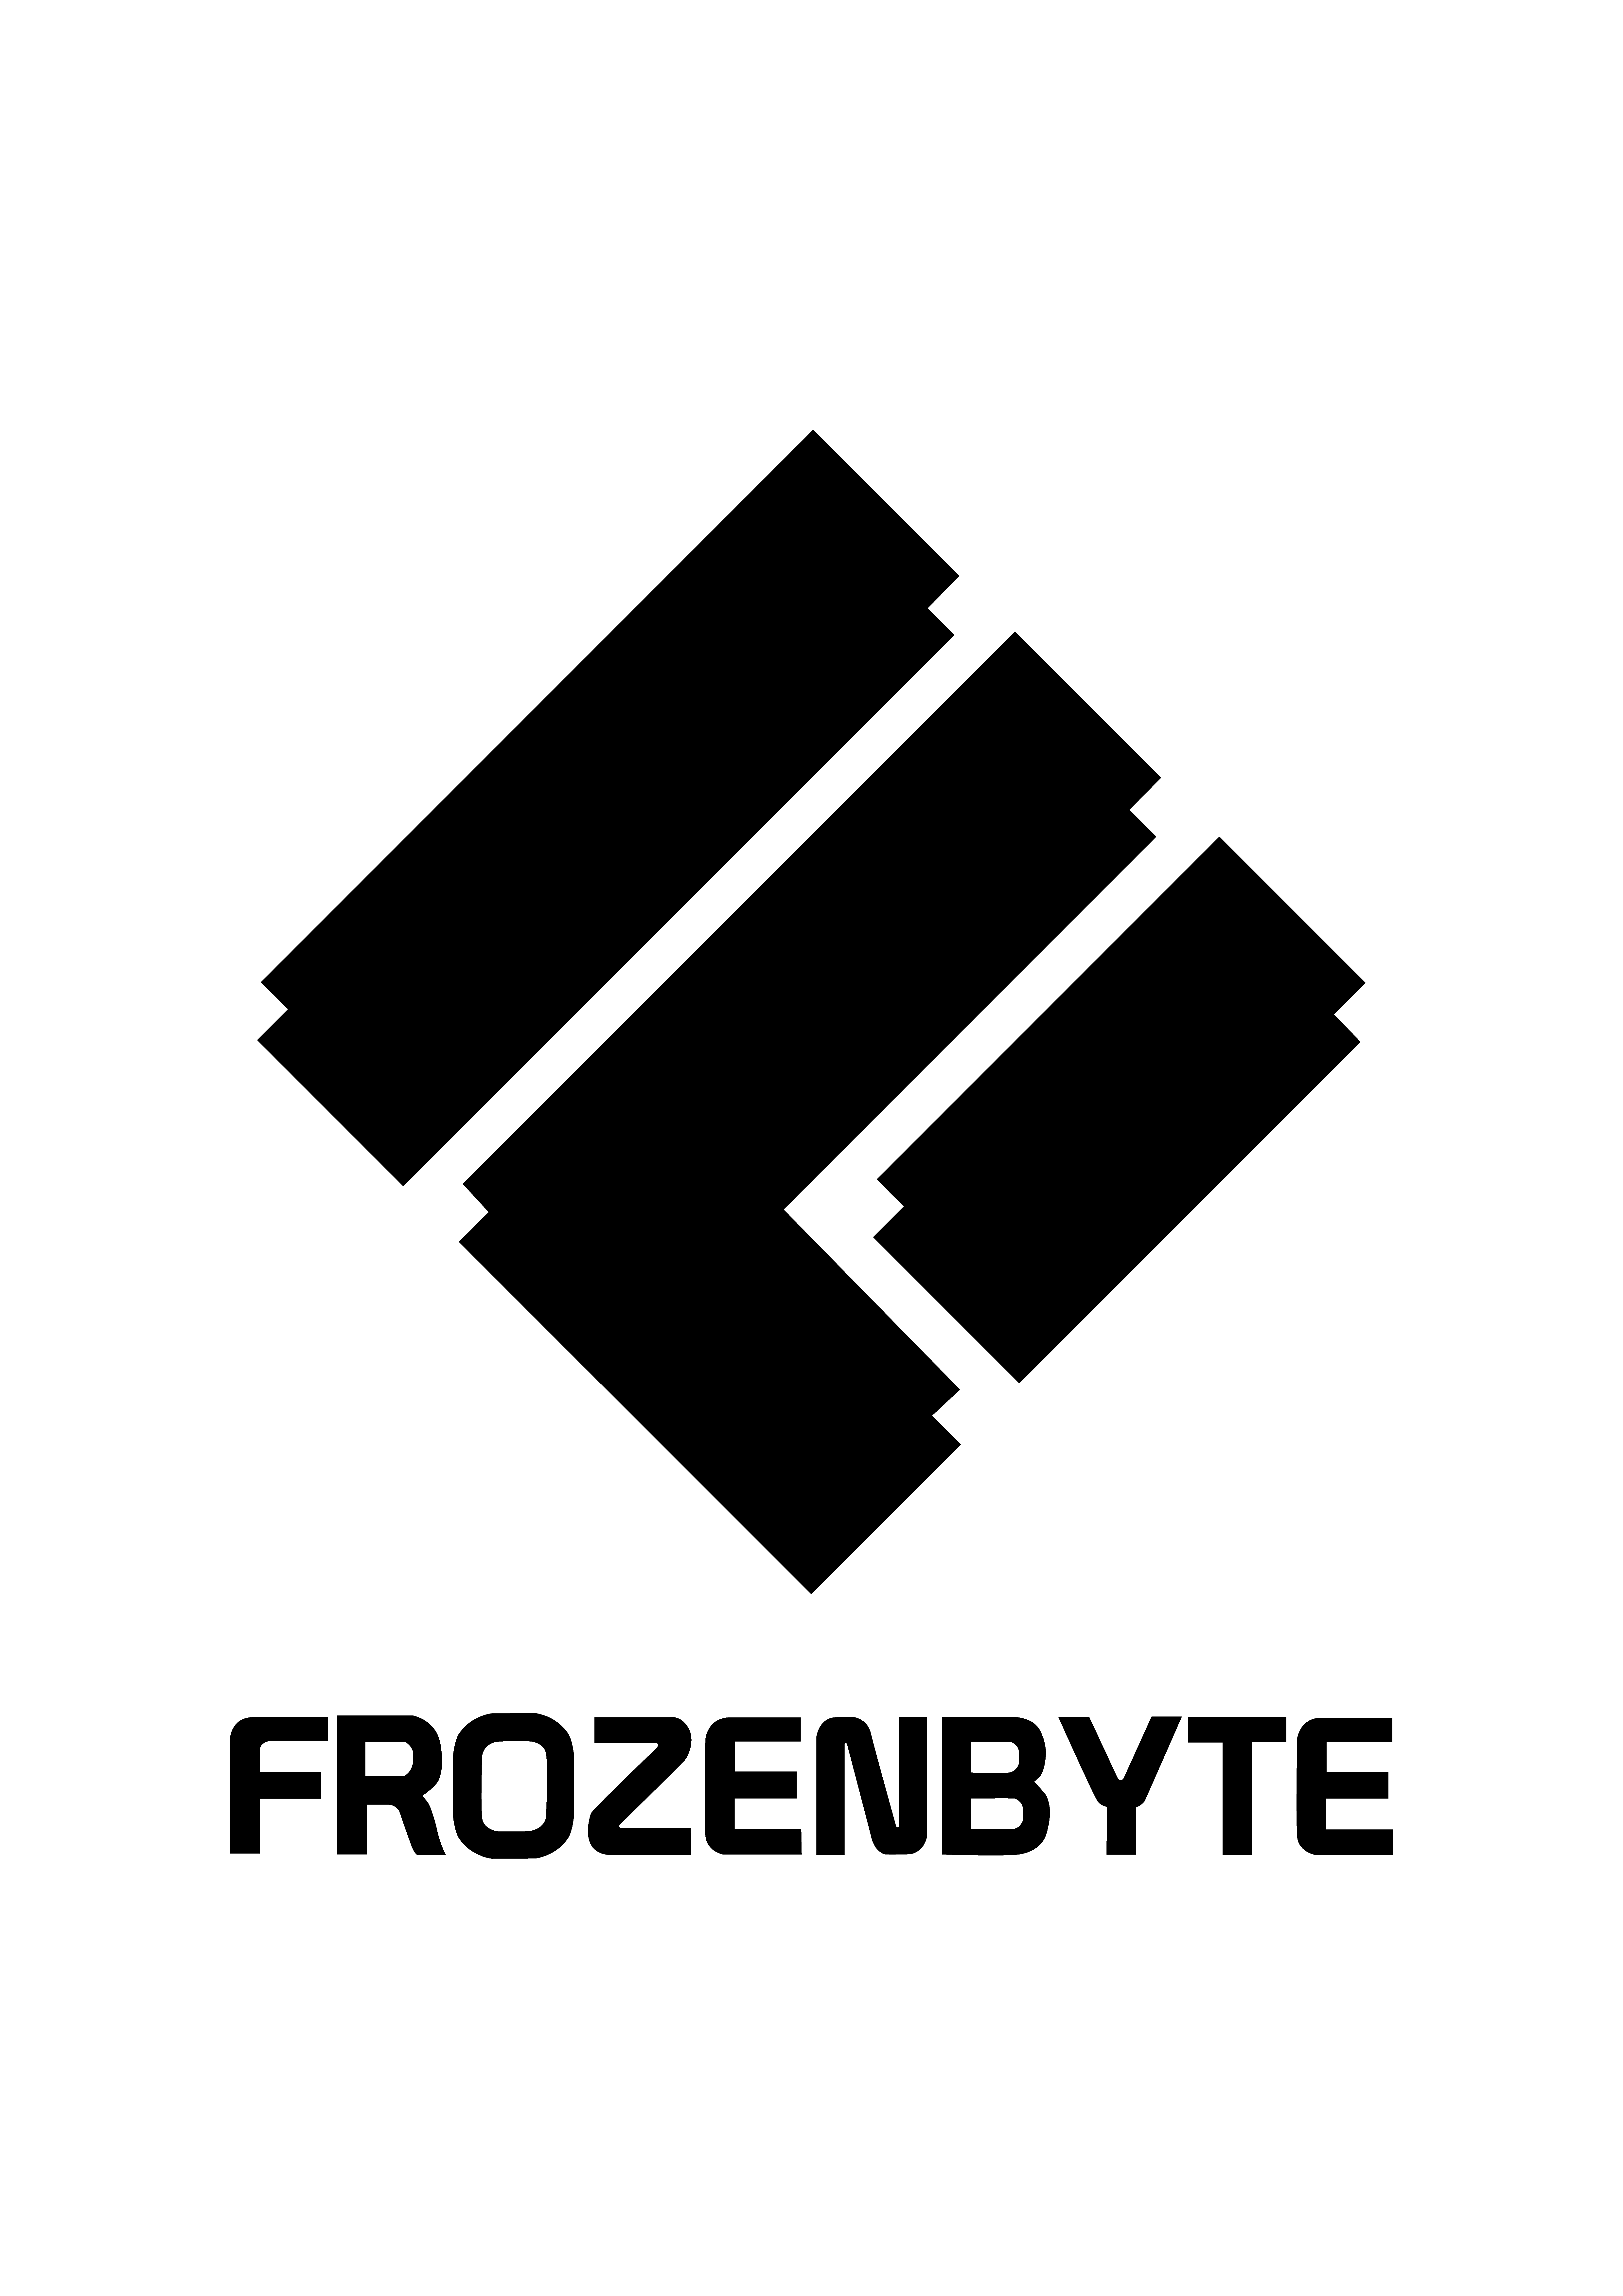 Frozenbyte transparent logo - black